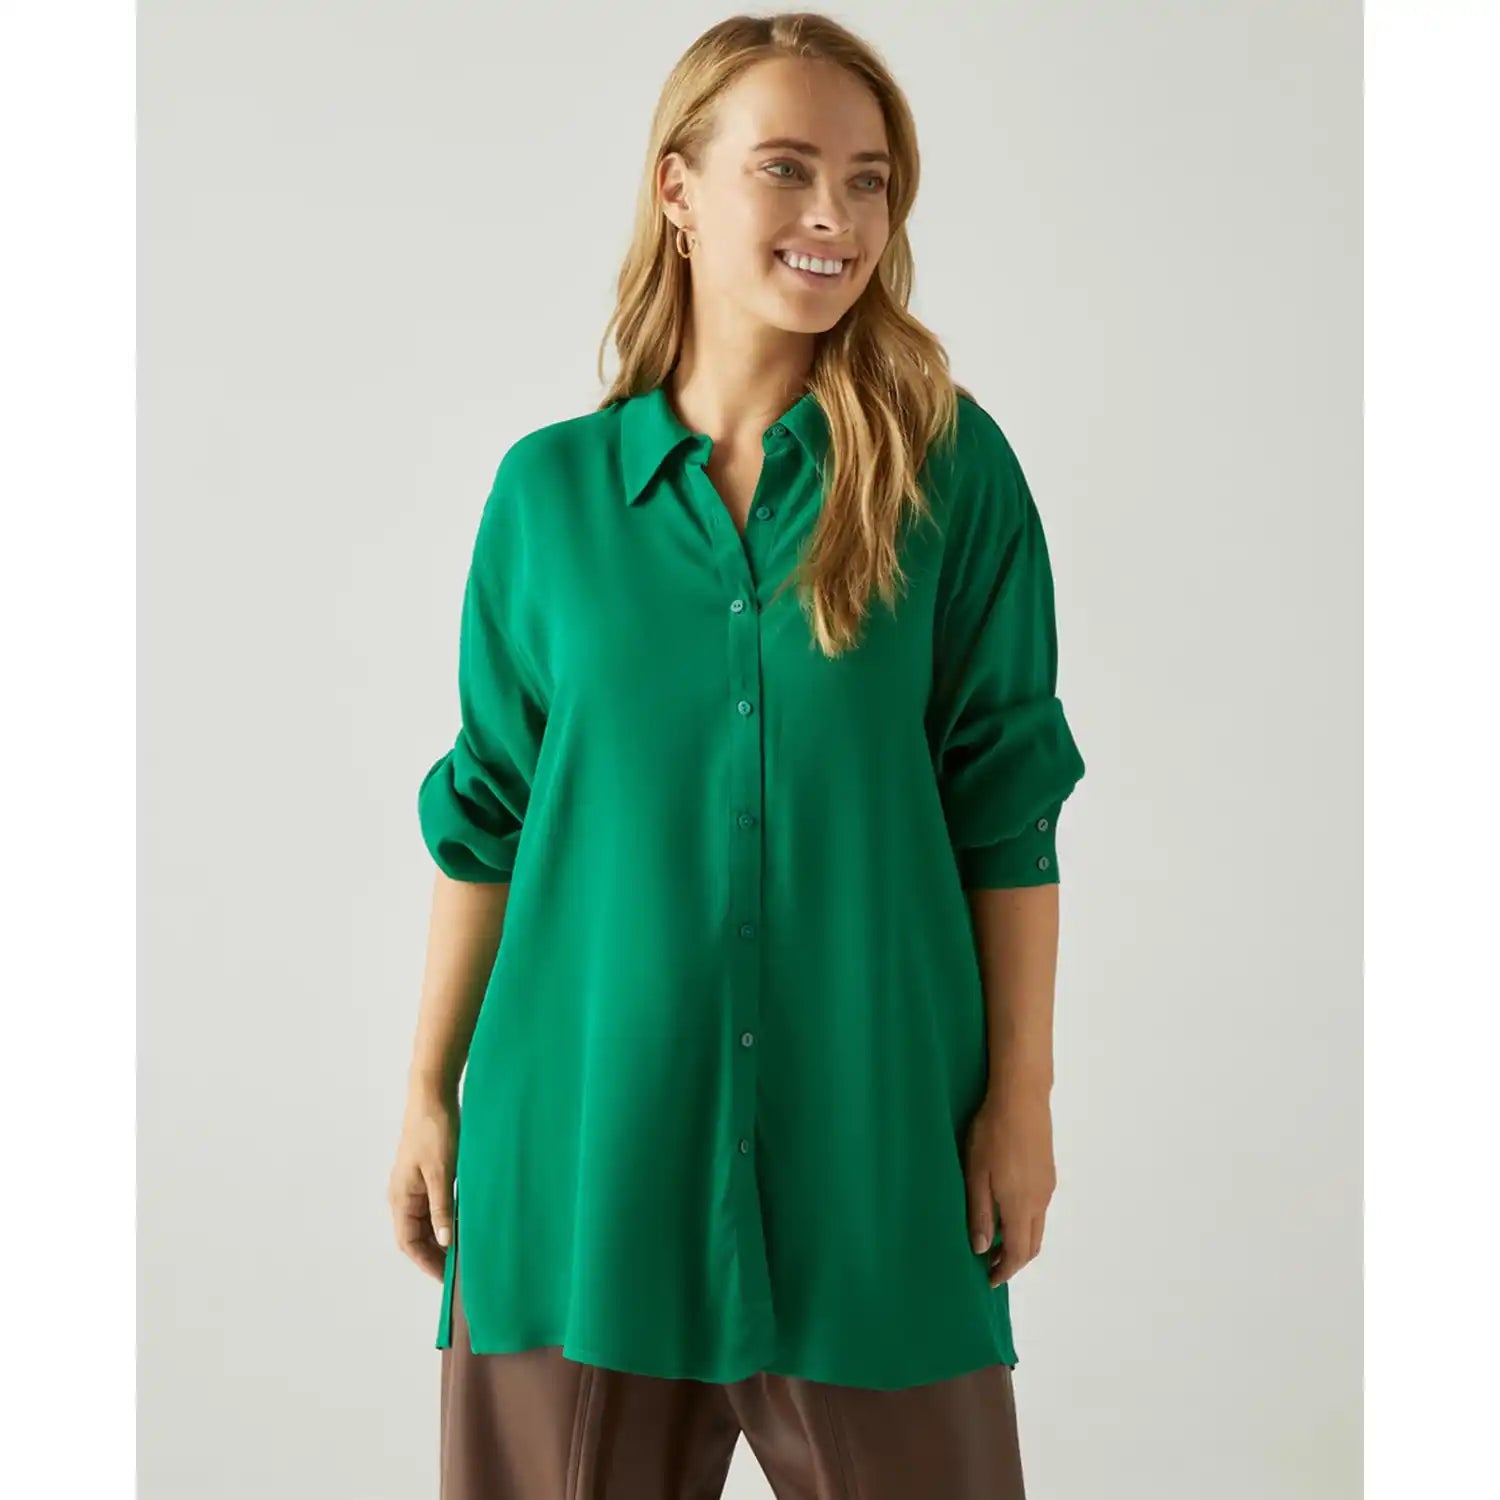 Couchel Plain Shirt - Green 1 Shaws Department Stores